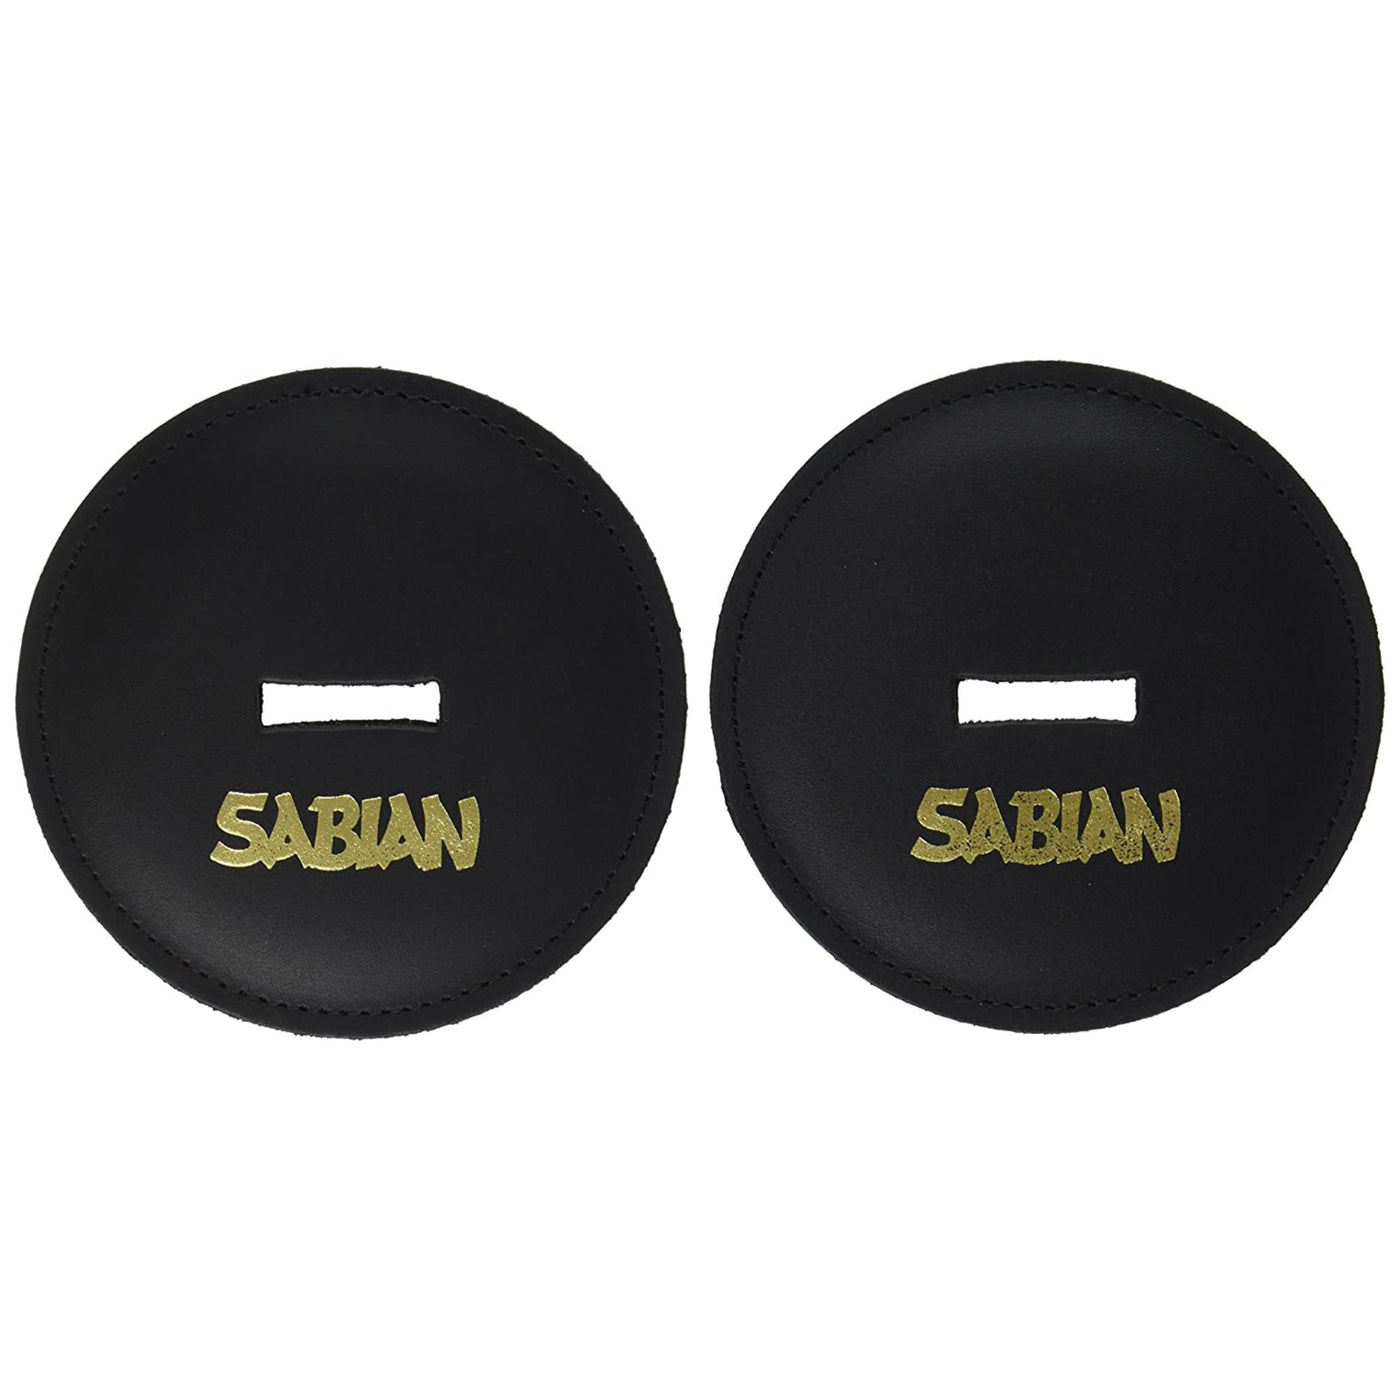 Sabian Leather Cymbal Pads